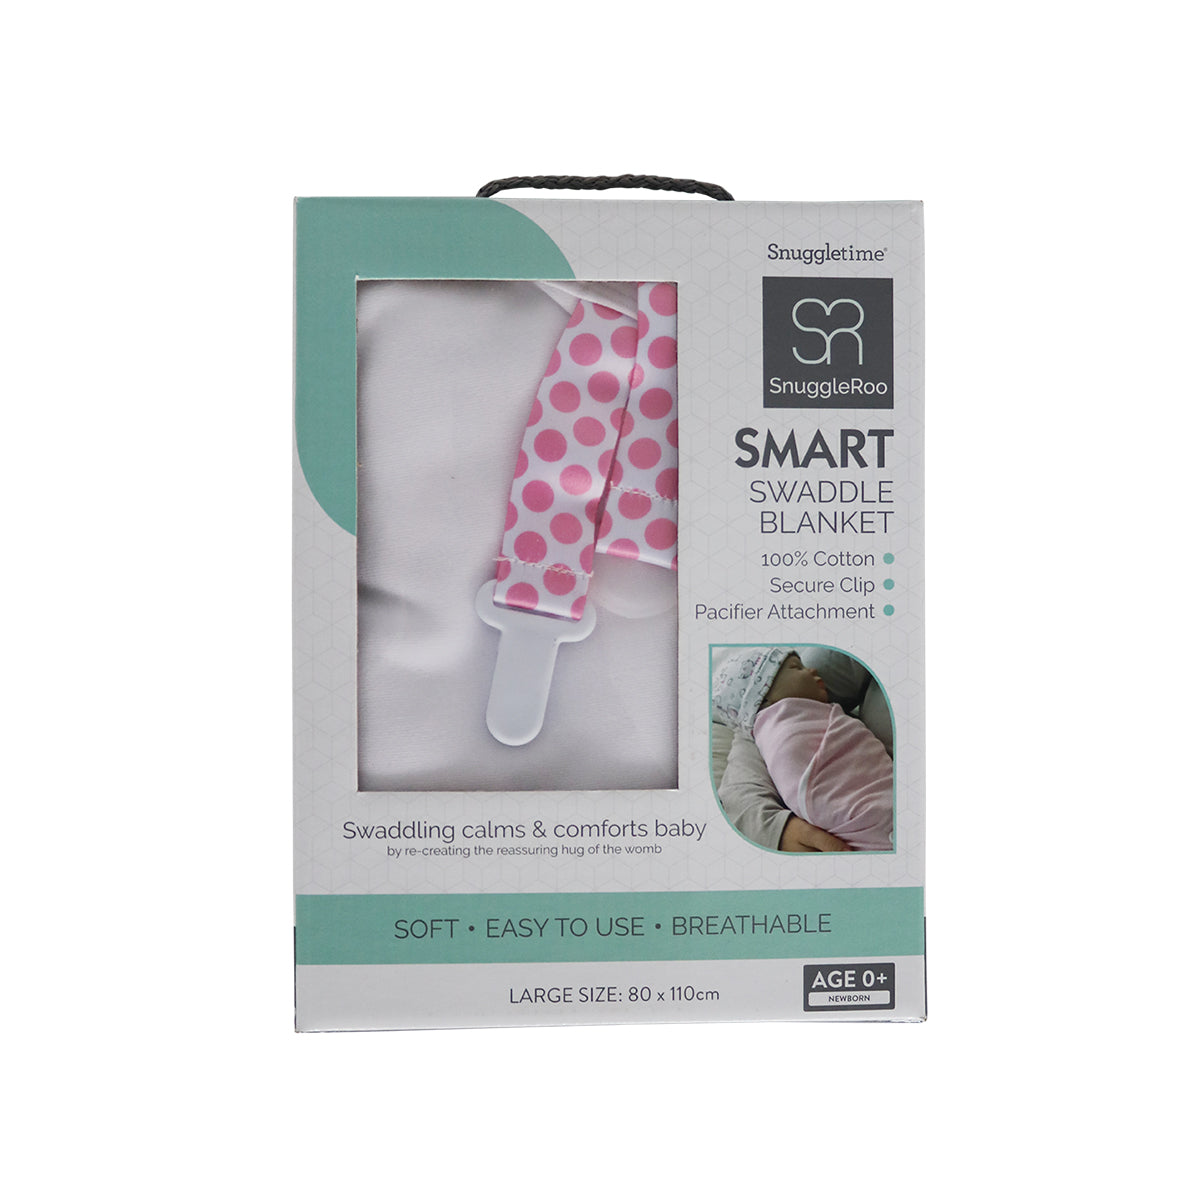 Snuggletime SnuggleRoo Smart Swaddle Blanket